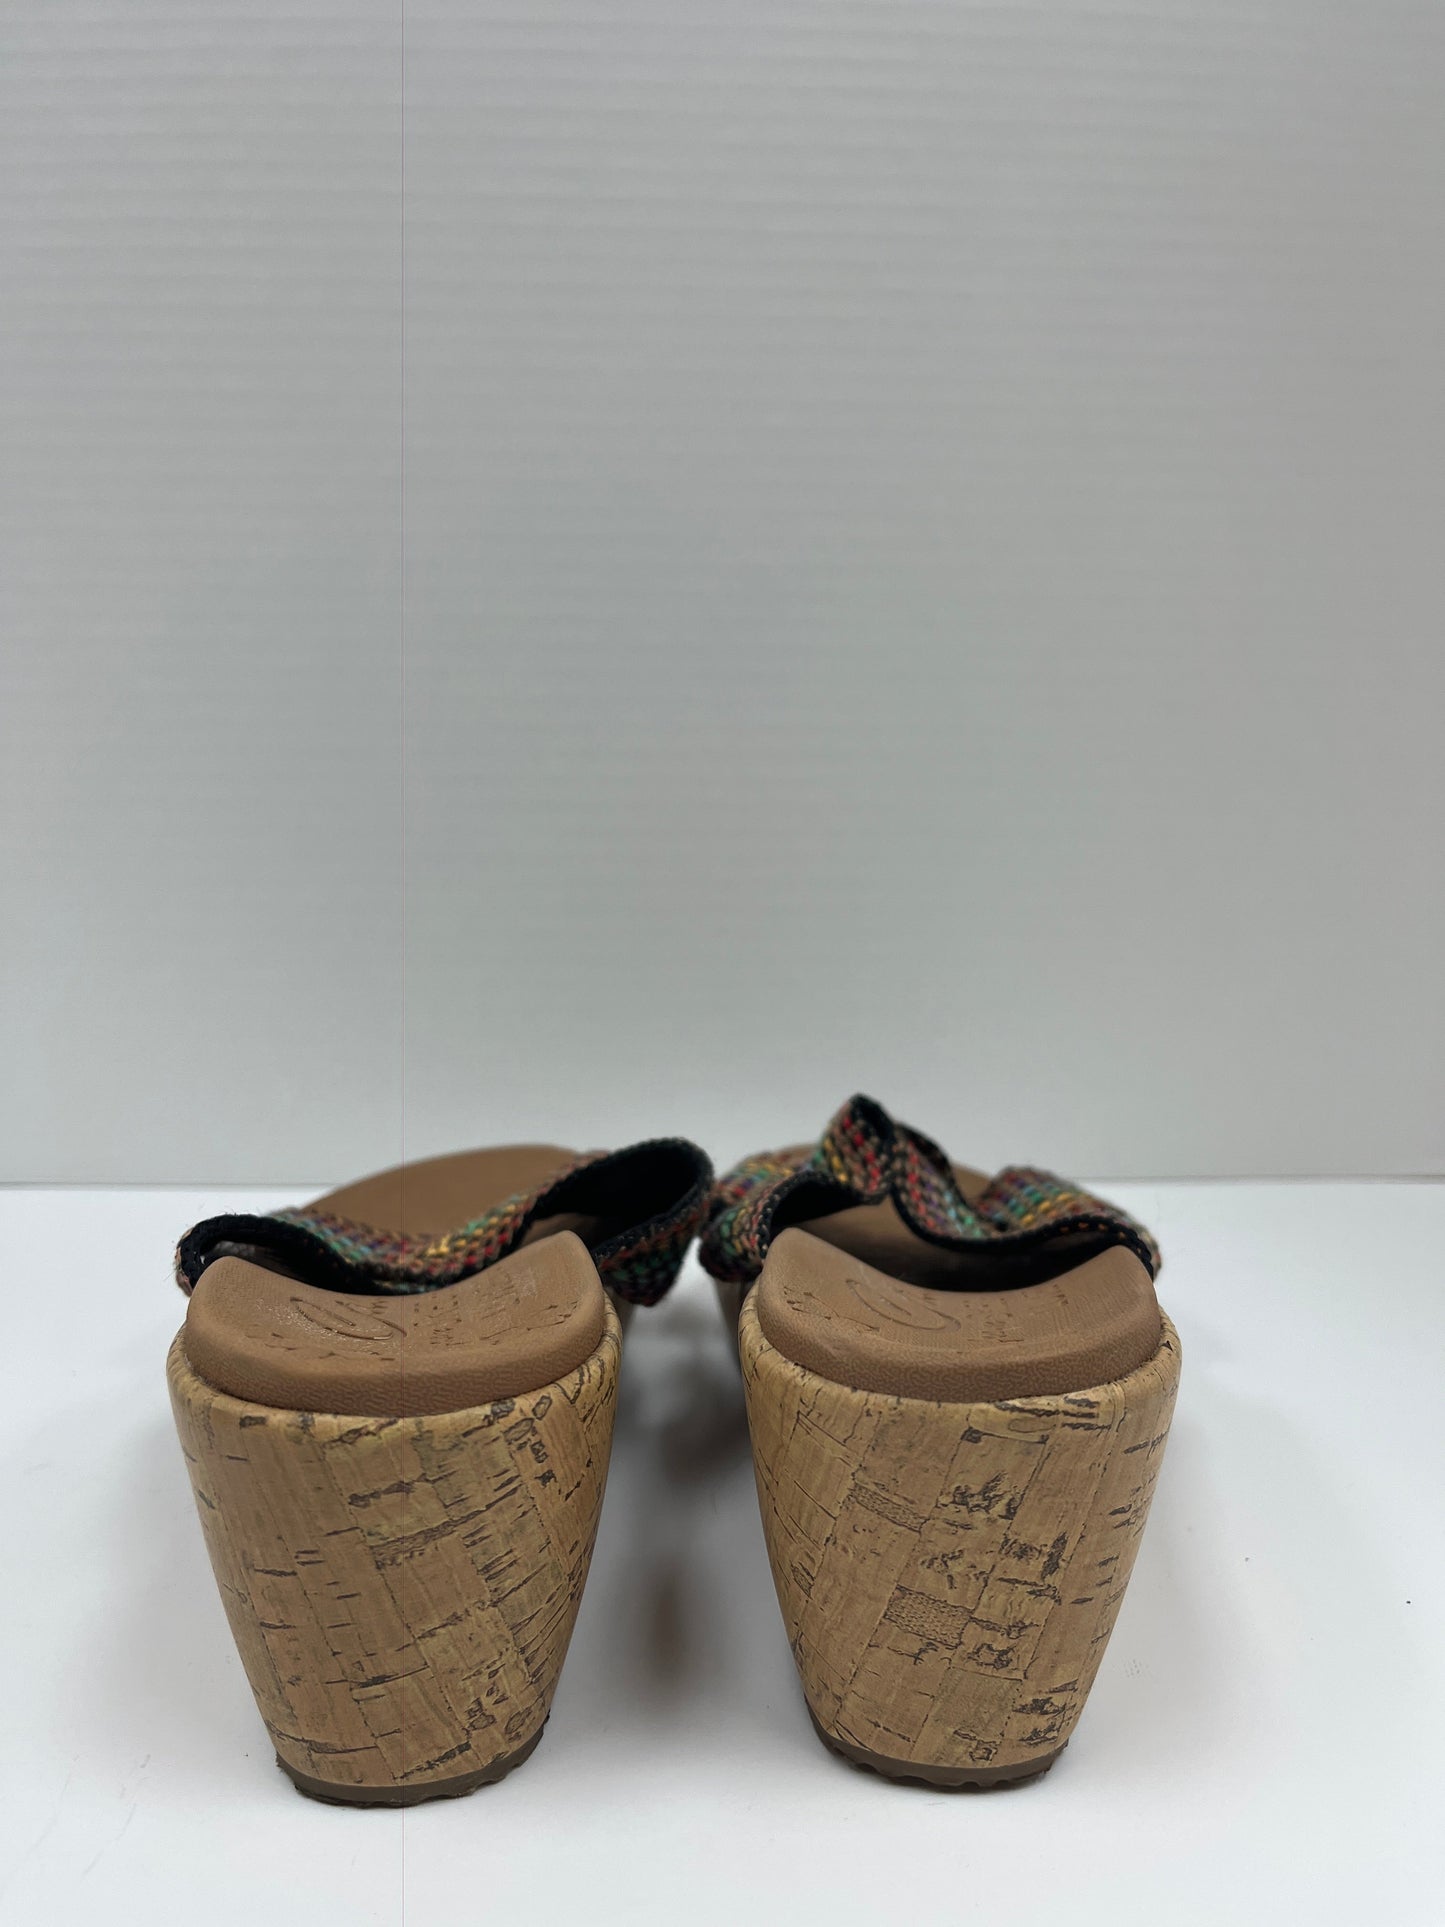 Sandals Heels Wedge By Skechers  Size: 8